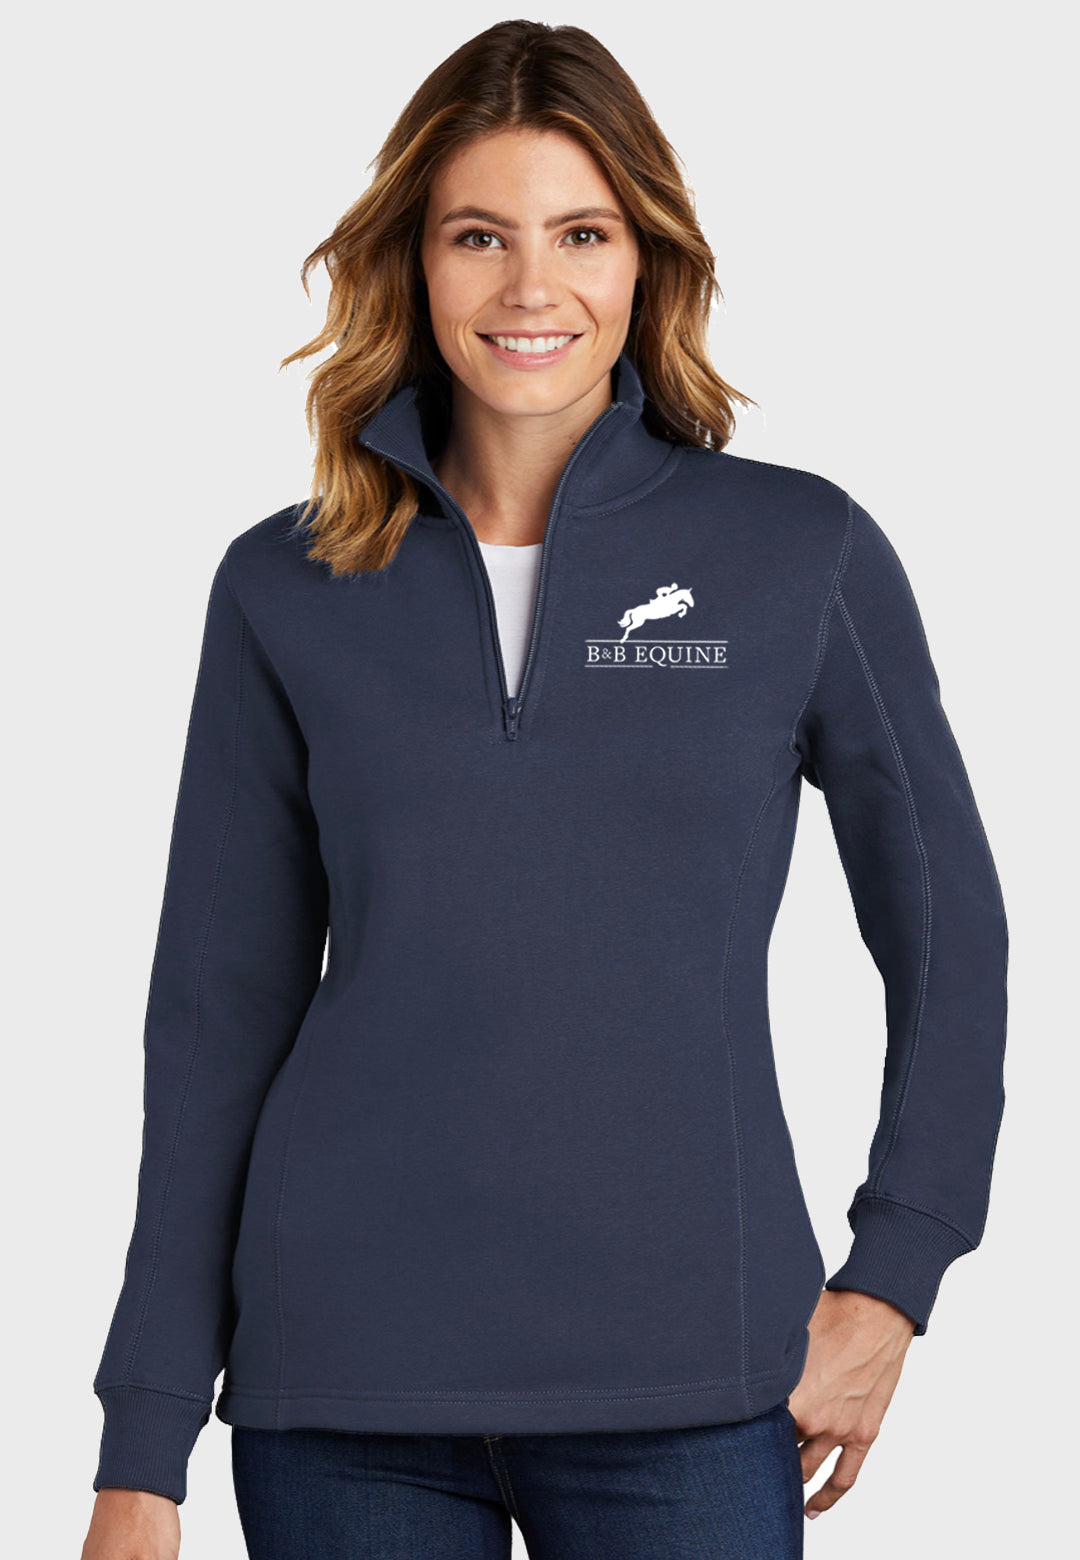 B & B Equine Sport-Tek® 1/4-Zip Sweatshirt - Ladies/Mens Sizes, 2 Color Options